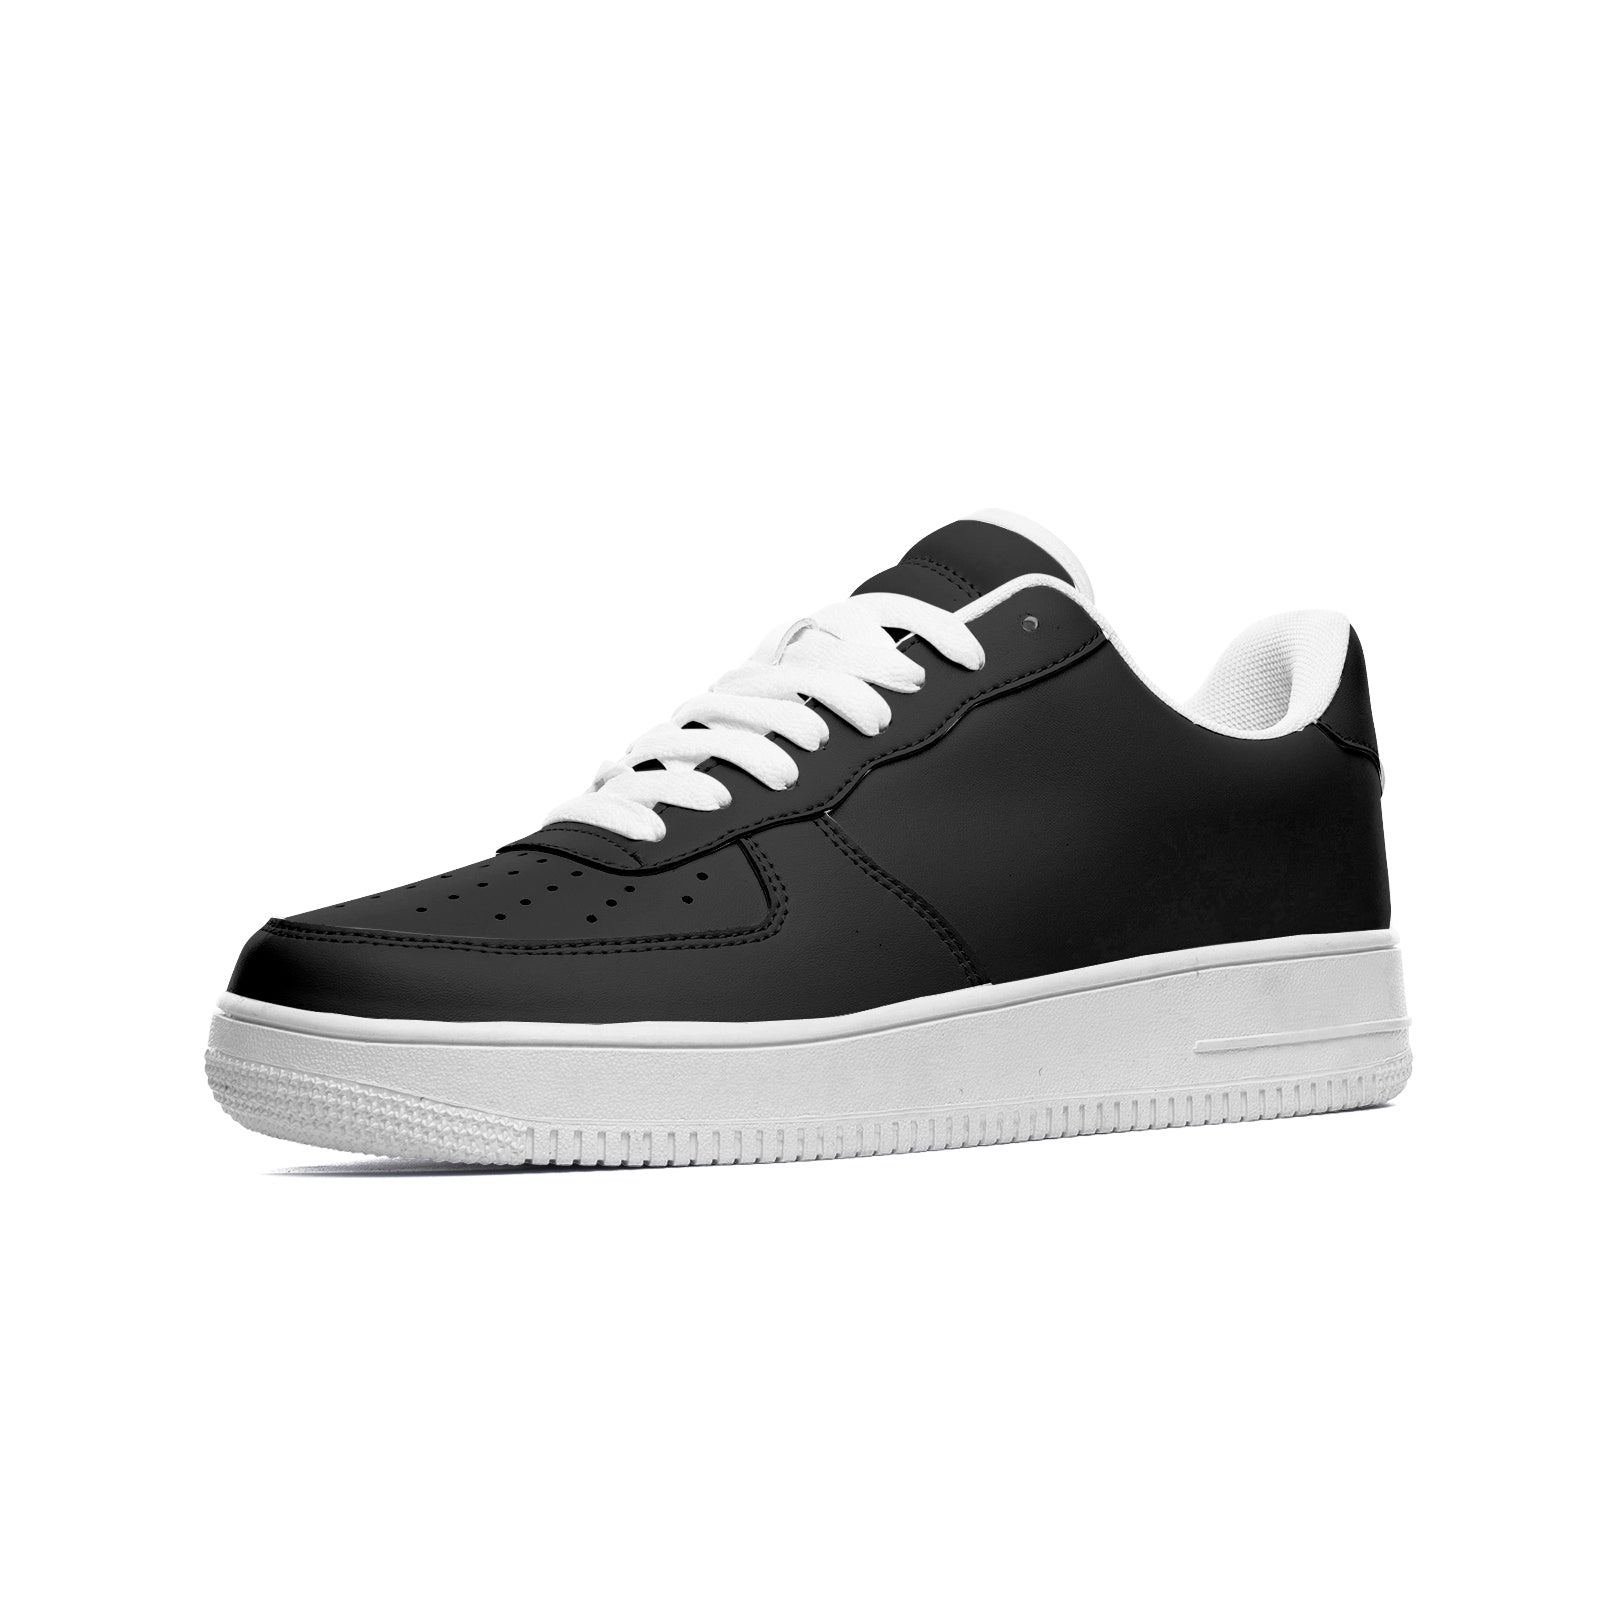 Space Runner Unisex Low Top Leather Sneakers Black - DromedarShop.com Online Boutique